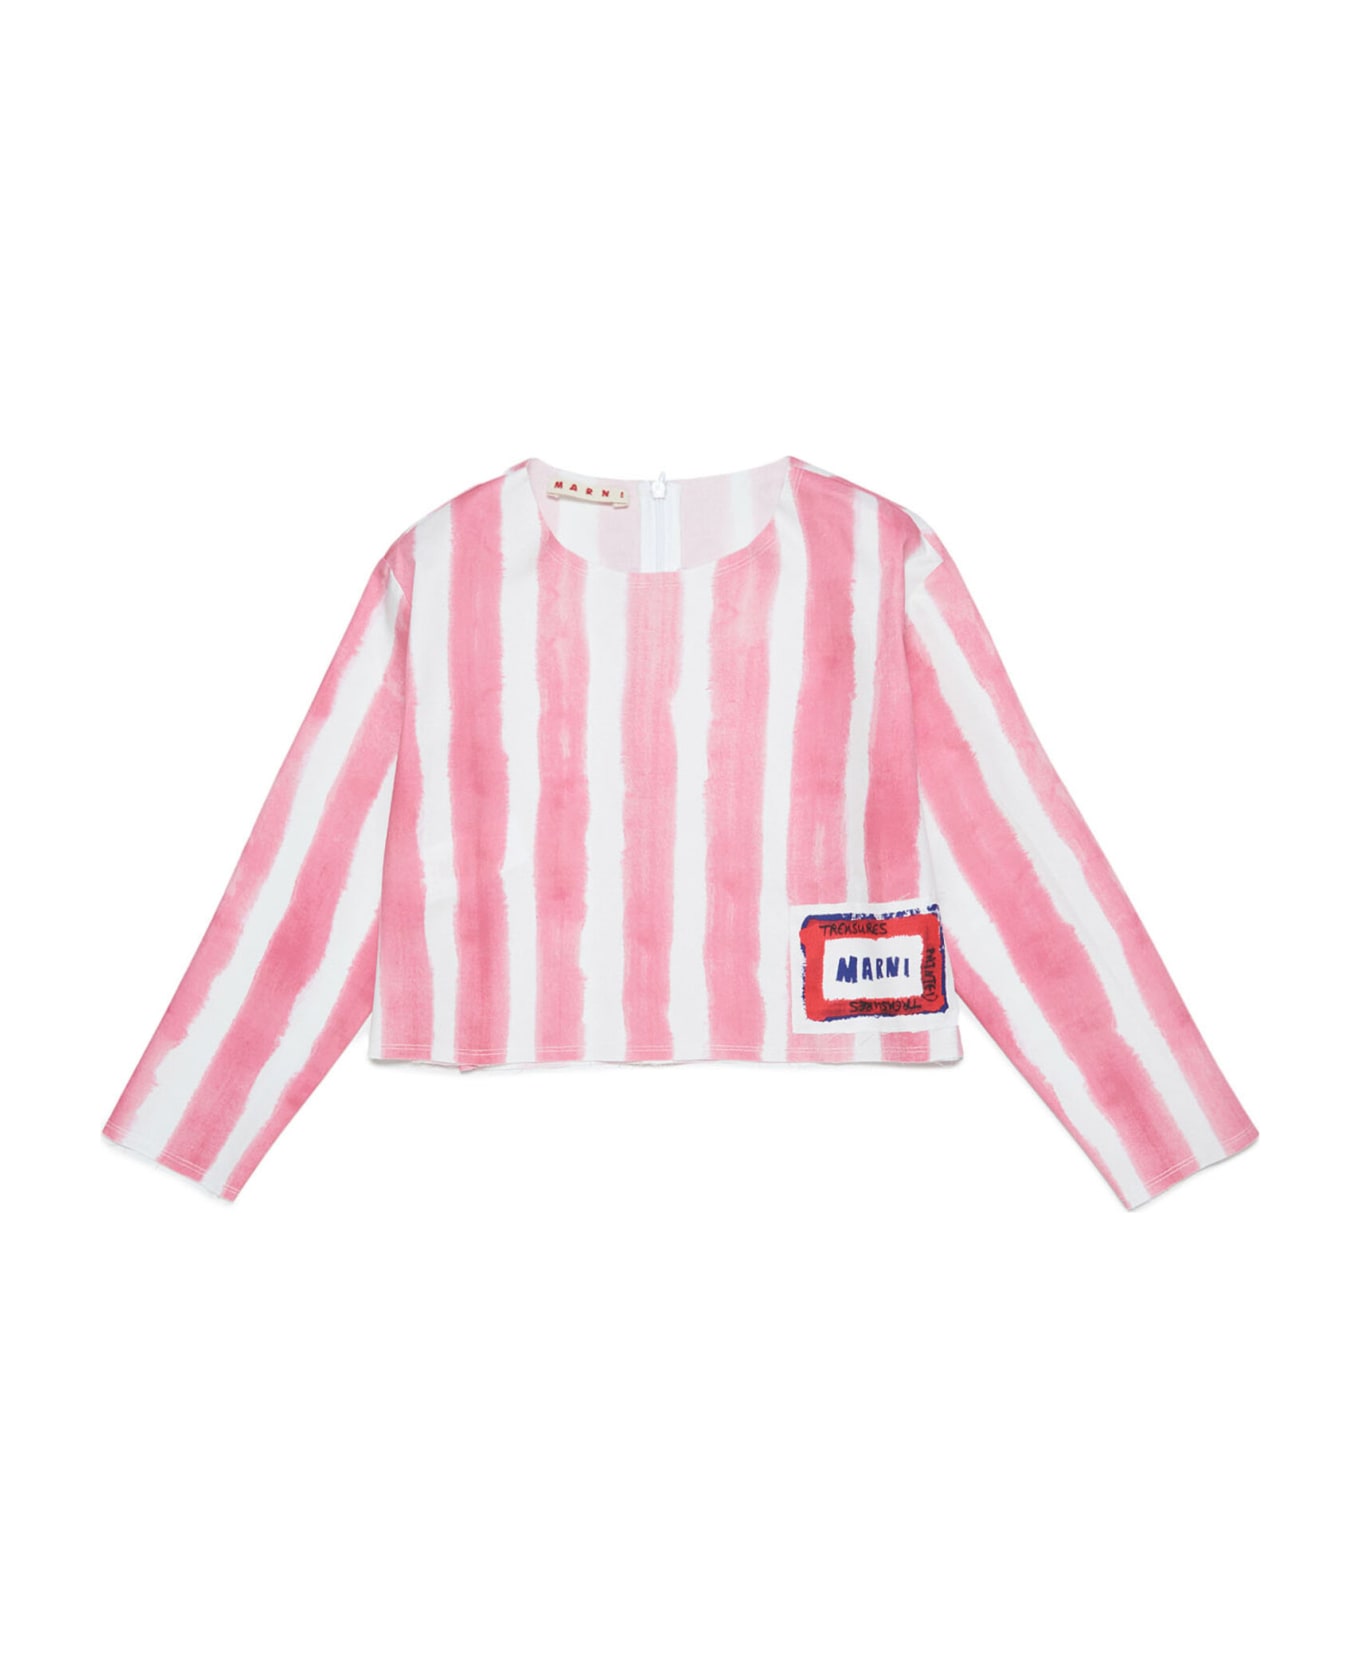 Marni Mc95f Shirt Marni Peachy Pink Shirt In Gabardine With Allover Striped Pattern - Peach blossom